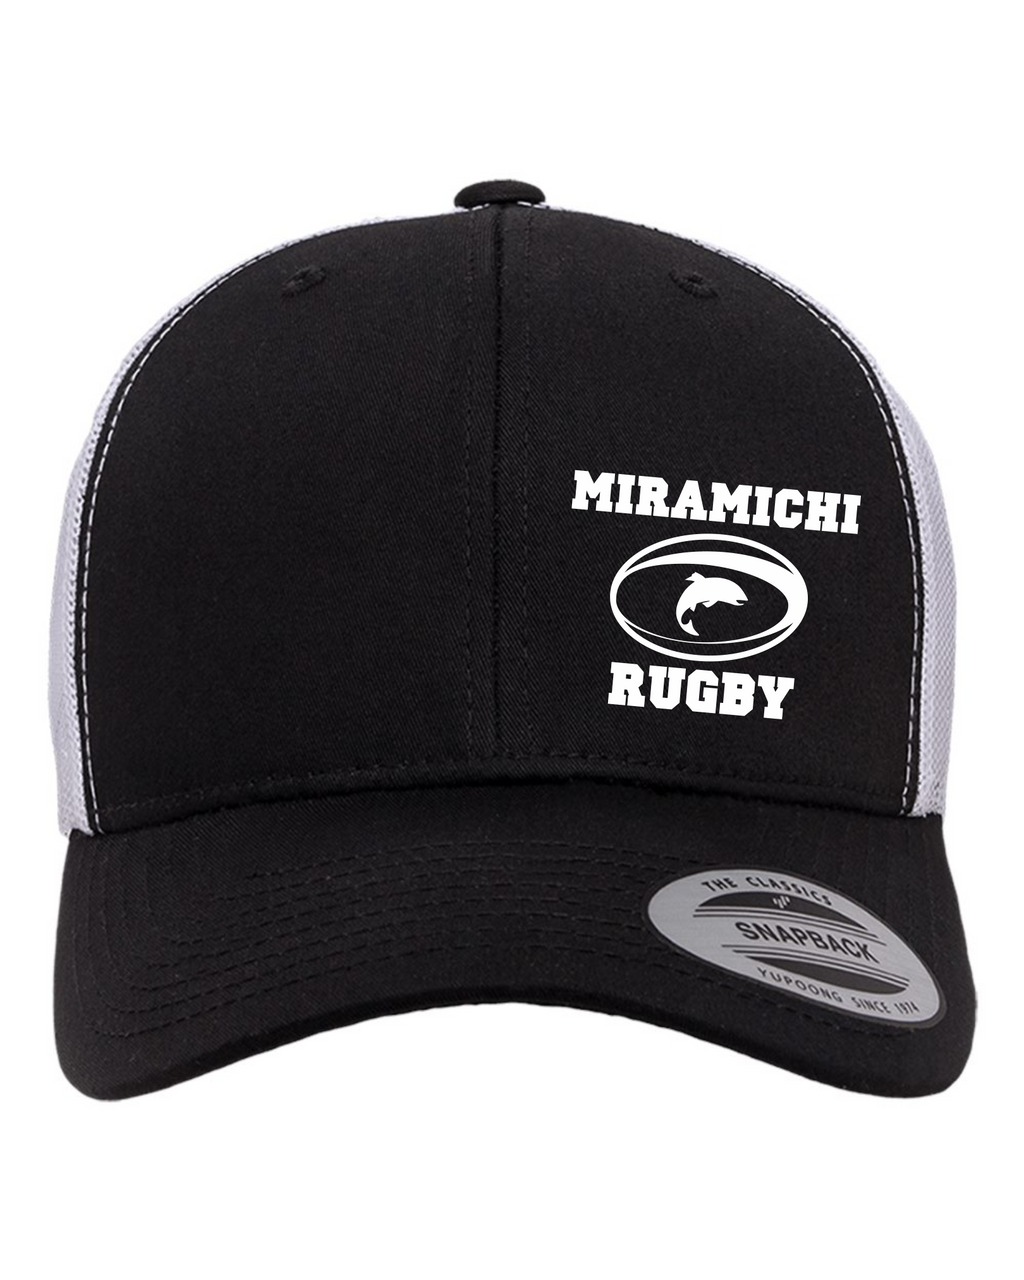 Miramichi Rugby - Black/White - Snapback Hat